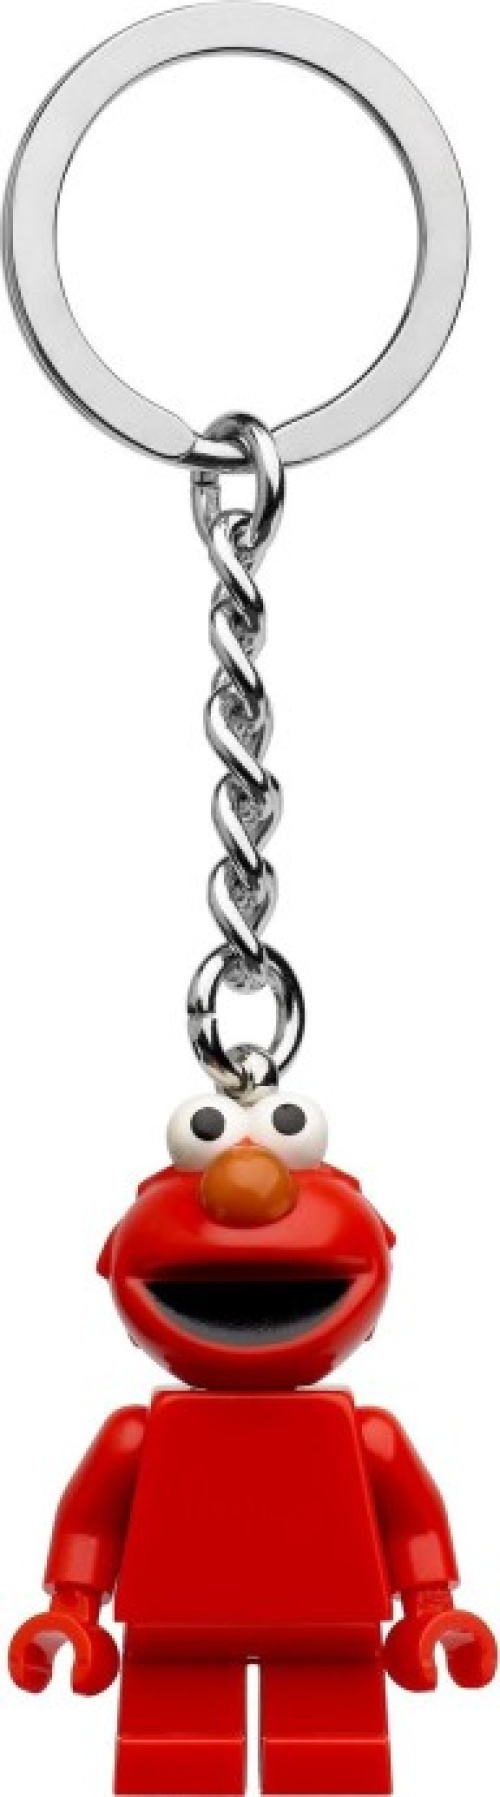 854145-1 Elmo Key Chain